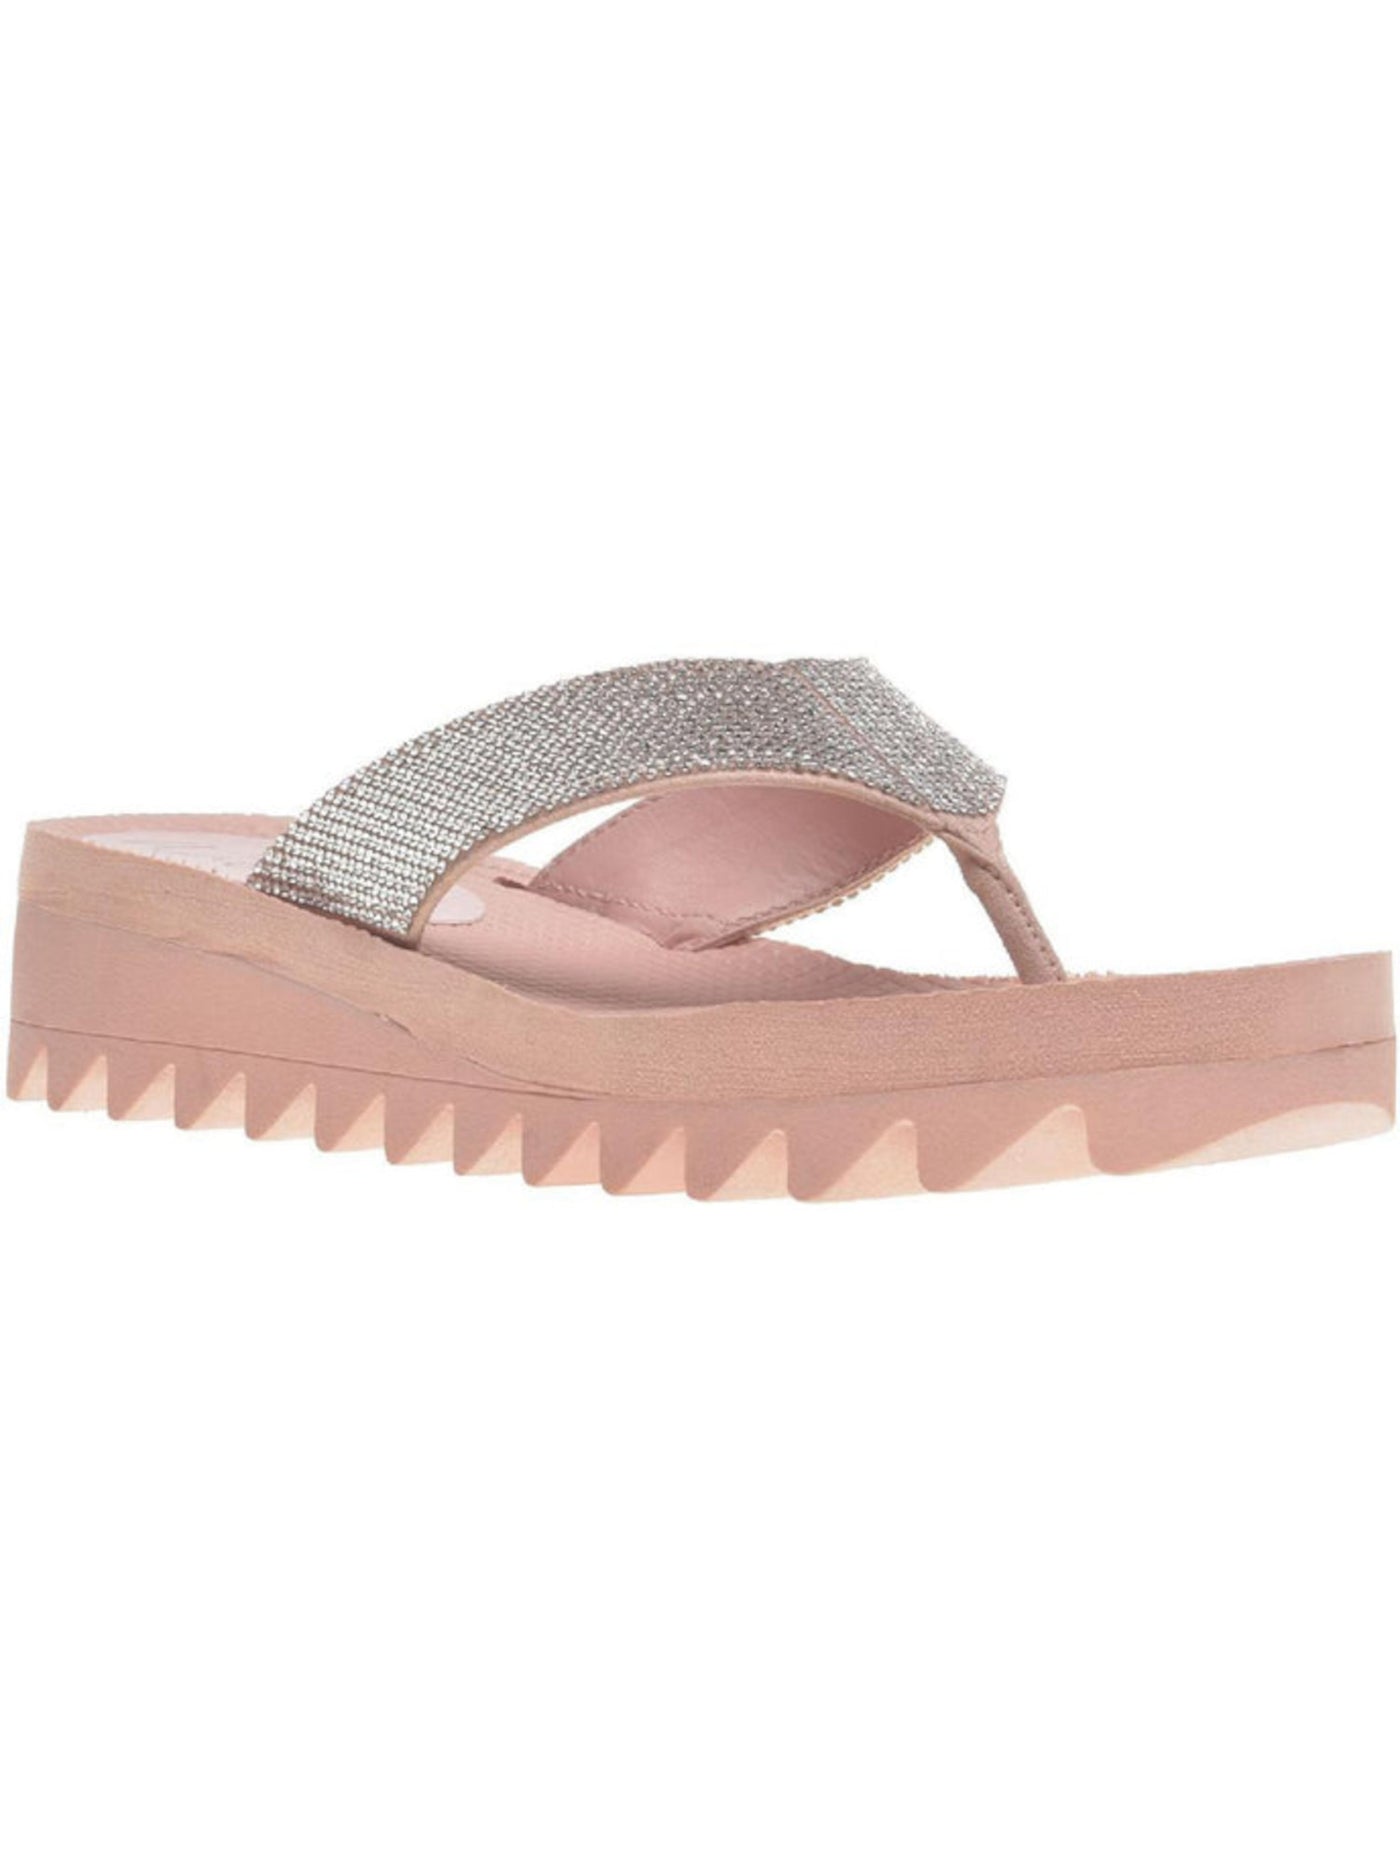 WILD PAIR Womens Pink Saw Tooth Sole Rhinestone Kalabasas Round Toe Wedge Slip On Thong Sandals Shoes 7 M